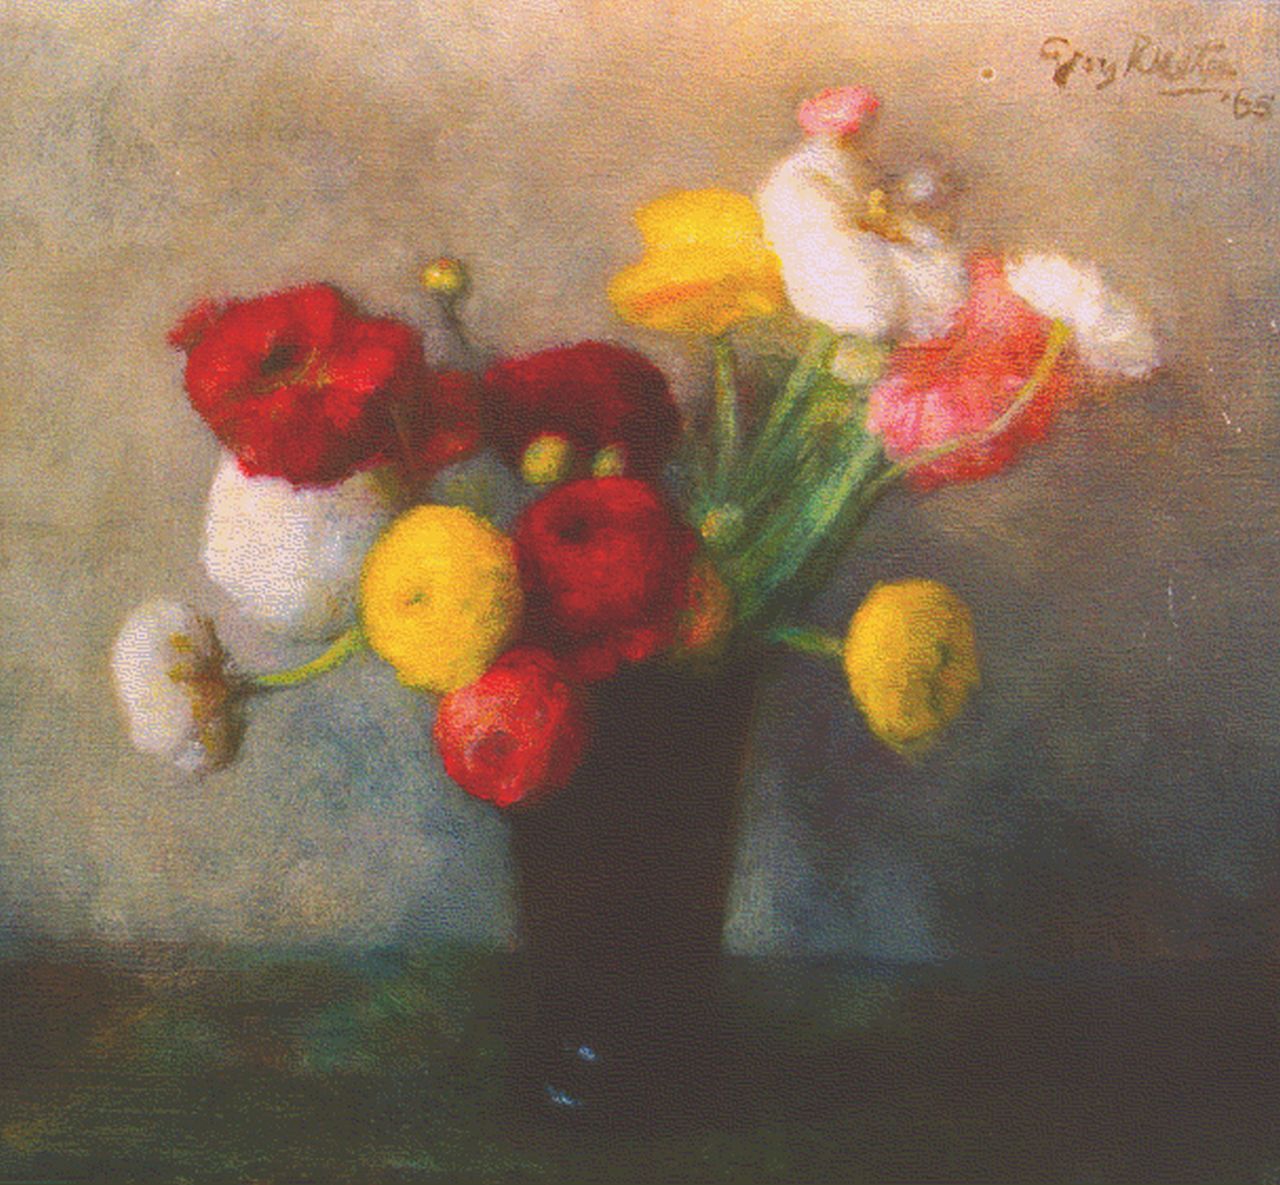 Rueter W.C.G.  | Wilhelm Christian 'Georg' Rueter, Turban buttercups in a vase, Öl auf Leinwand 41,3 x 44,0 cm, signed u.r. und dated '65